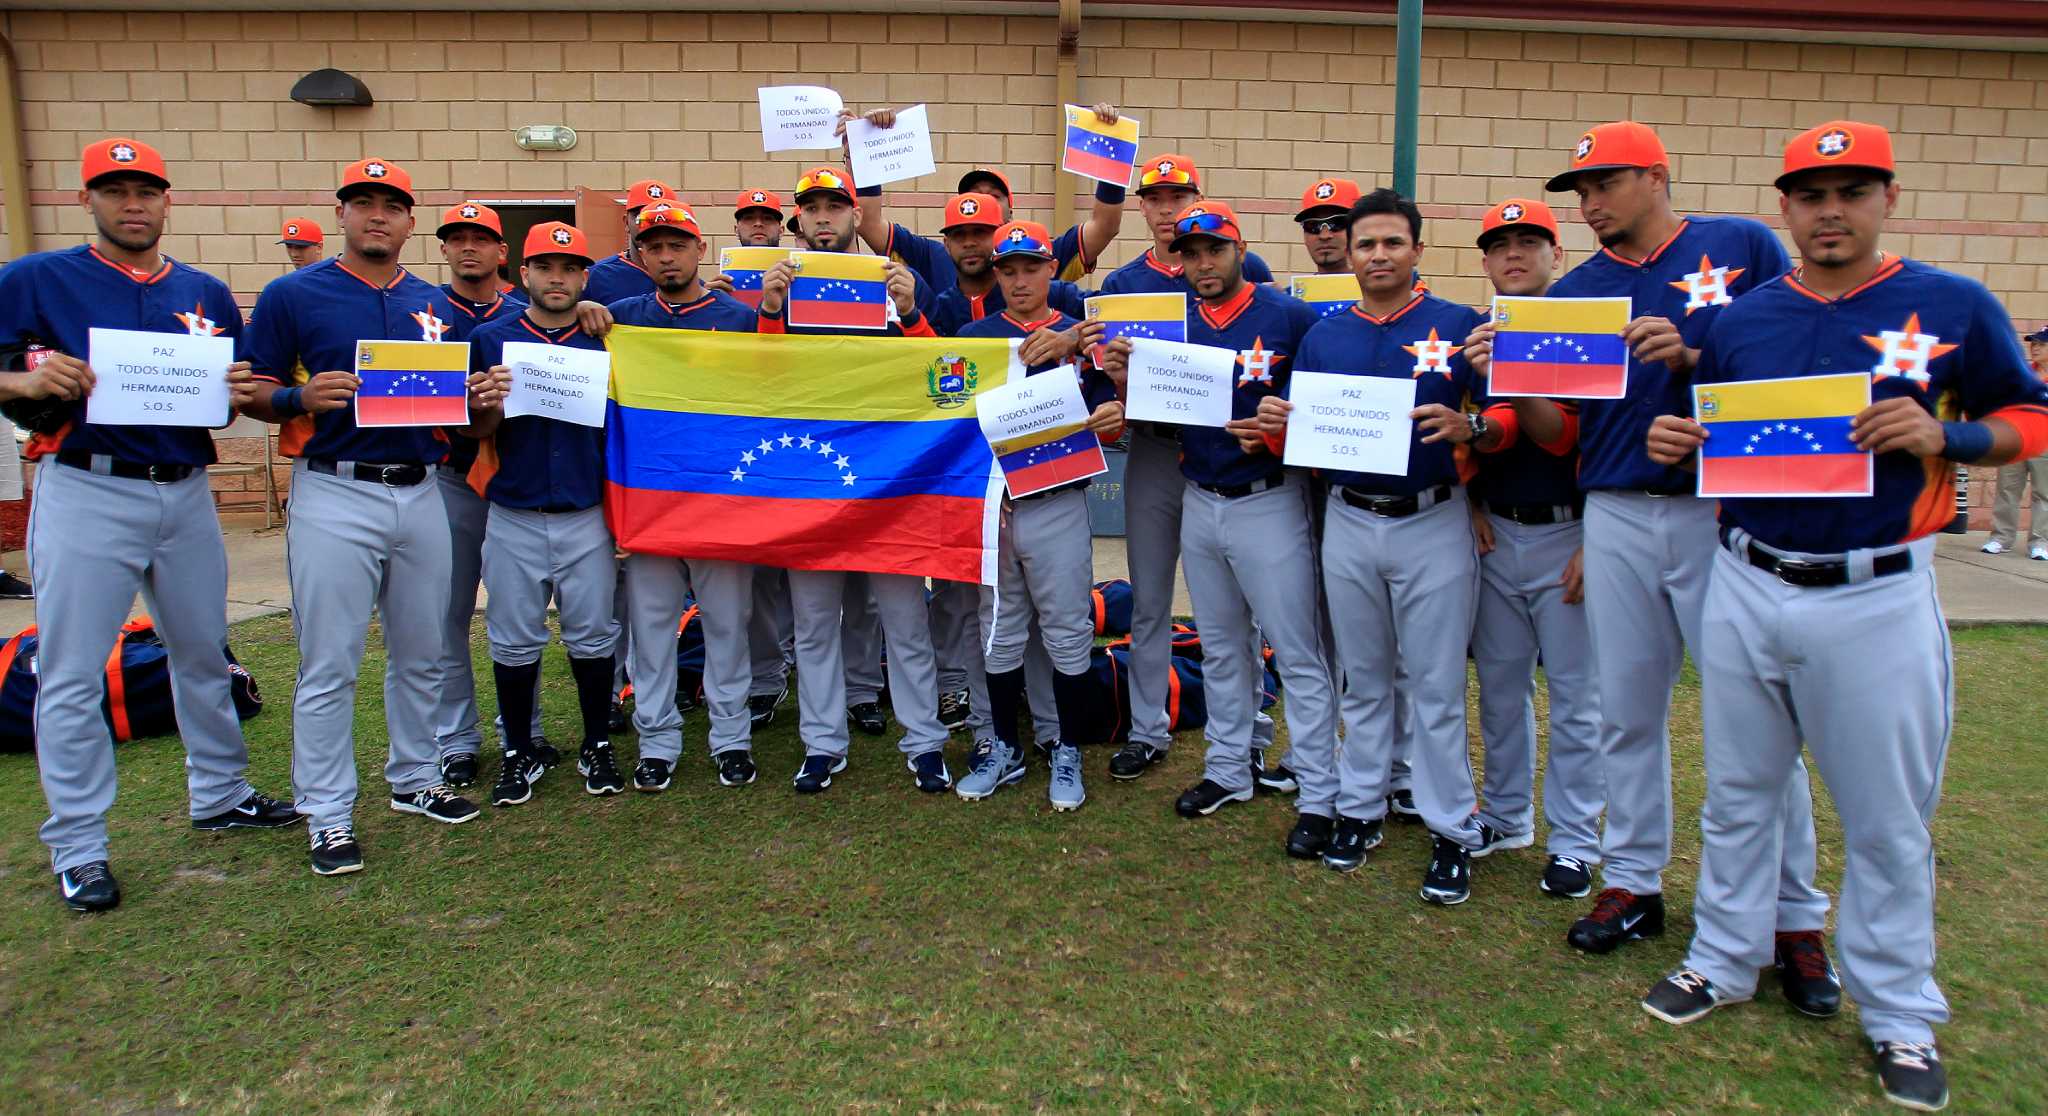 Jose Altuve Venezuela National Flag Houston Astros Limited Edition